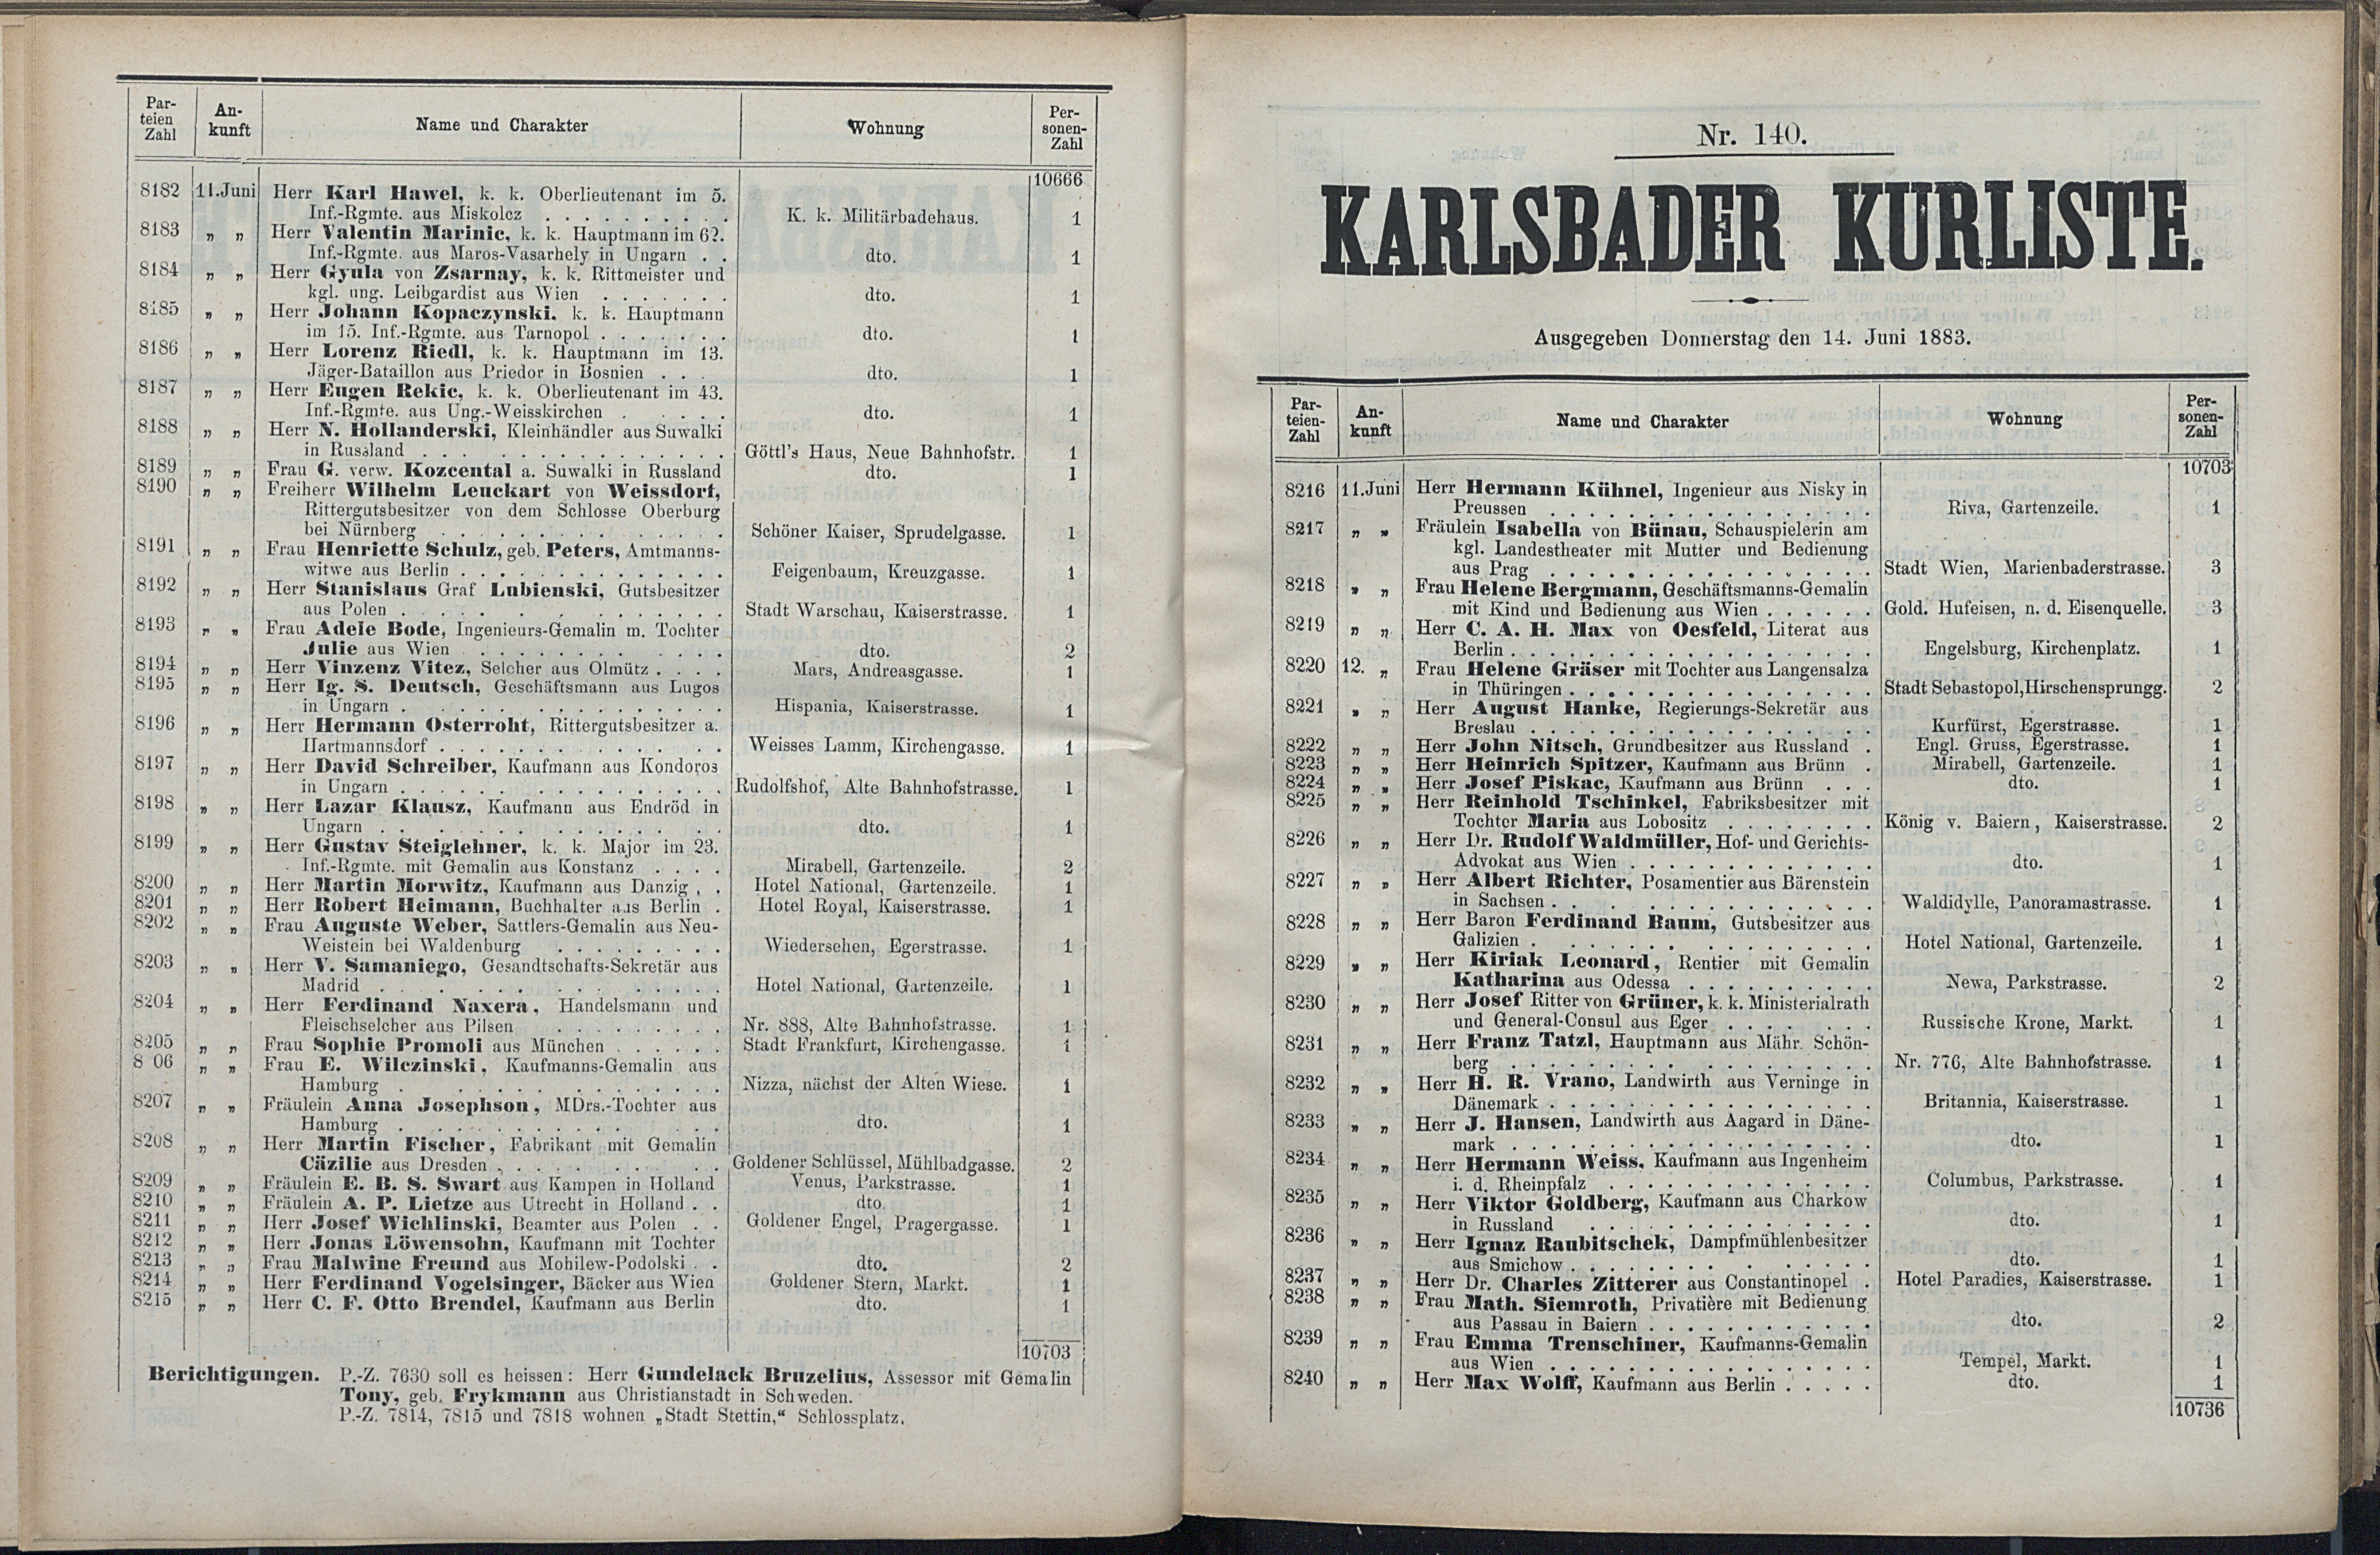 192. soap-kv_knihovna_karlsbader-kurliste-1883_1930